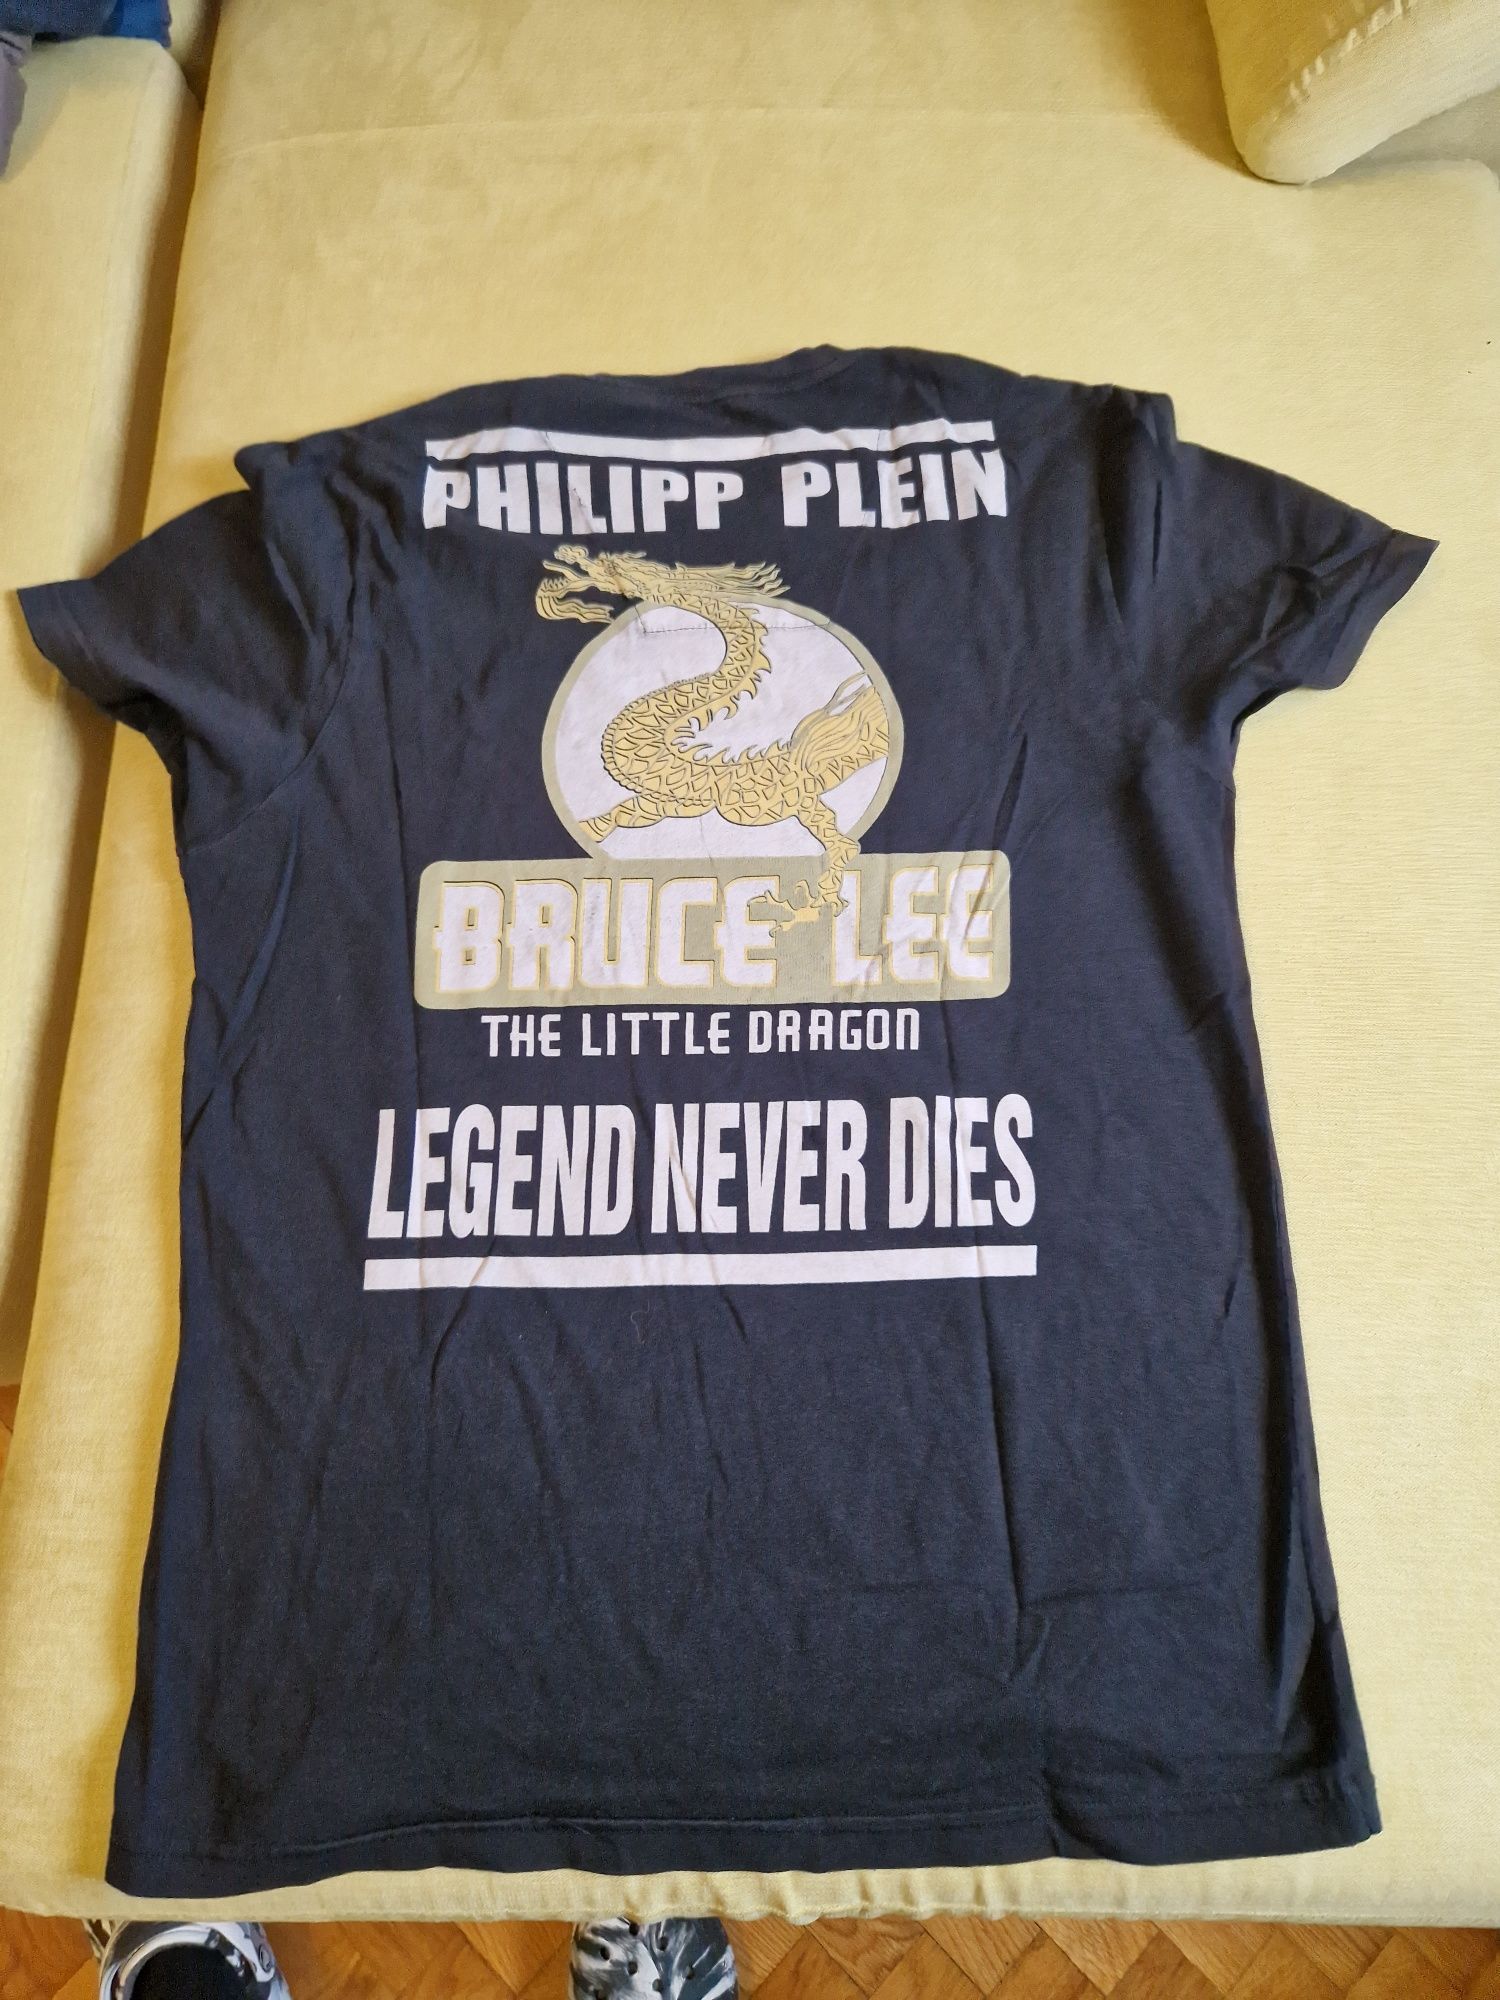 Tricou Philipp Plein Bruce Lee Limited Edition